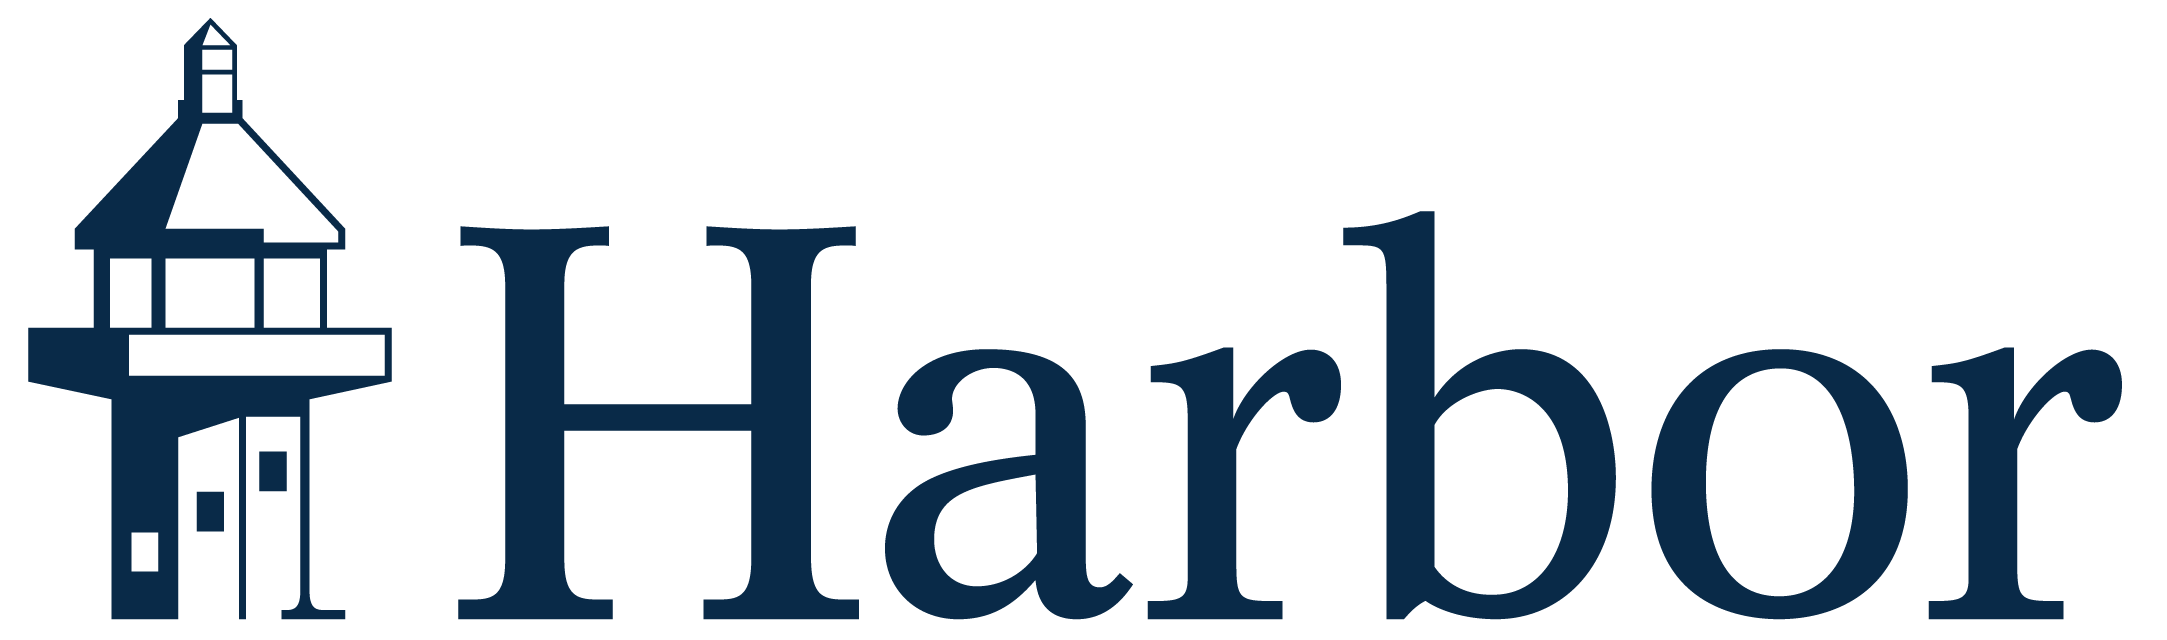 Harbor Capital Advisors, Inc. logo